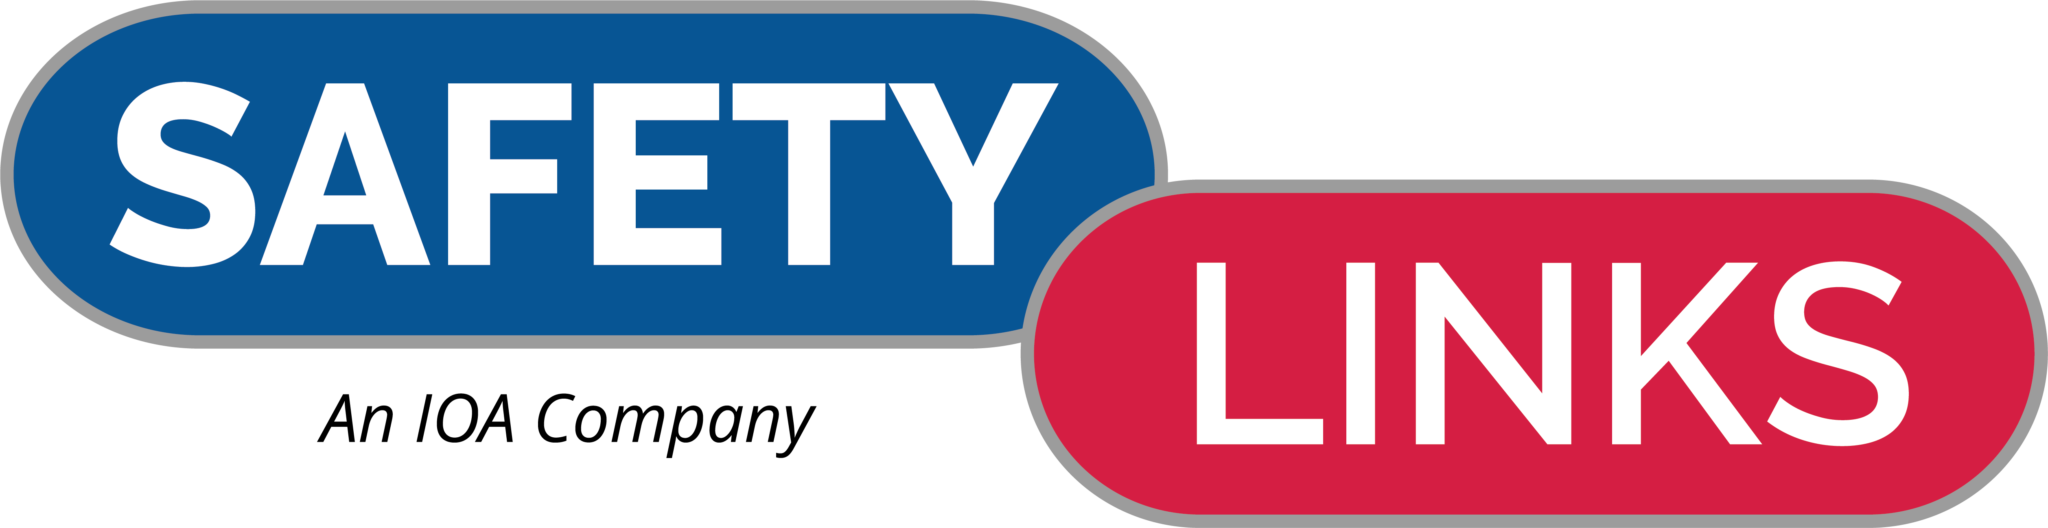 Safety Links Logo